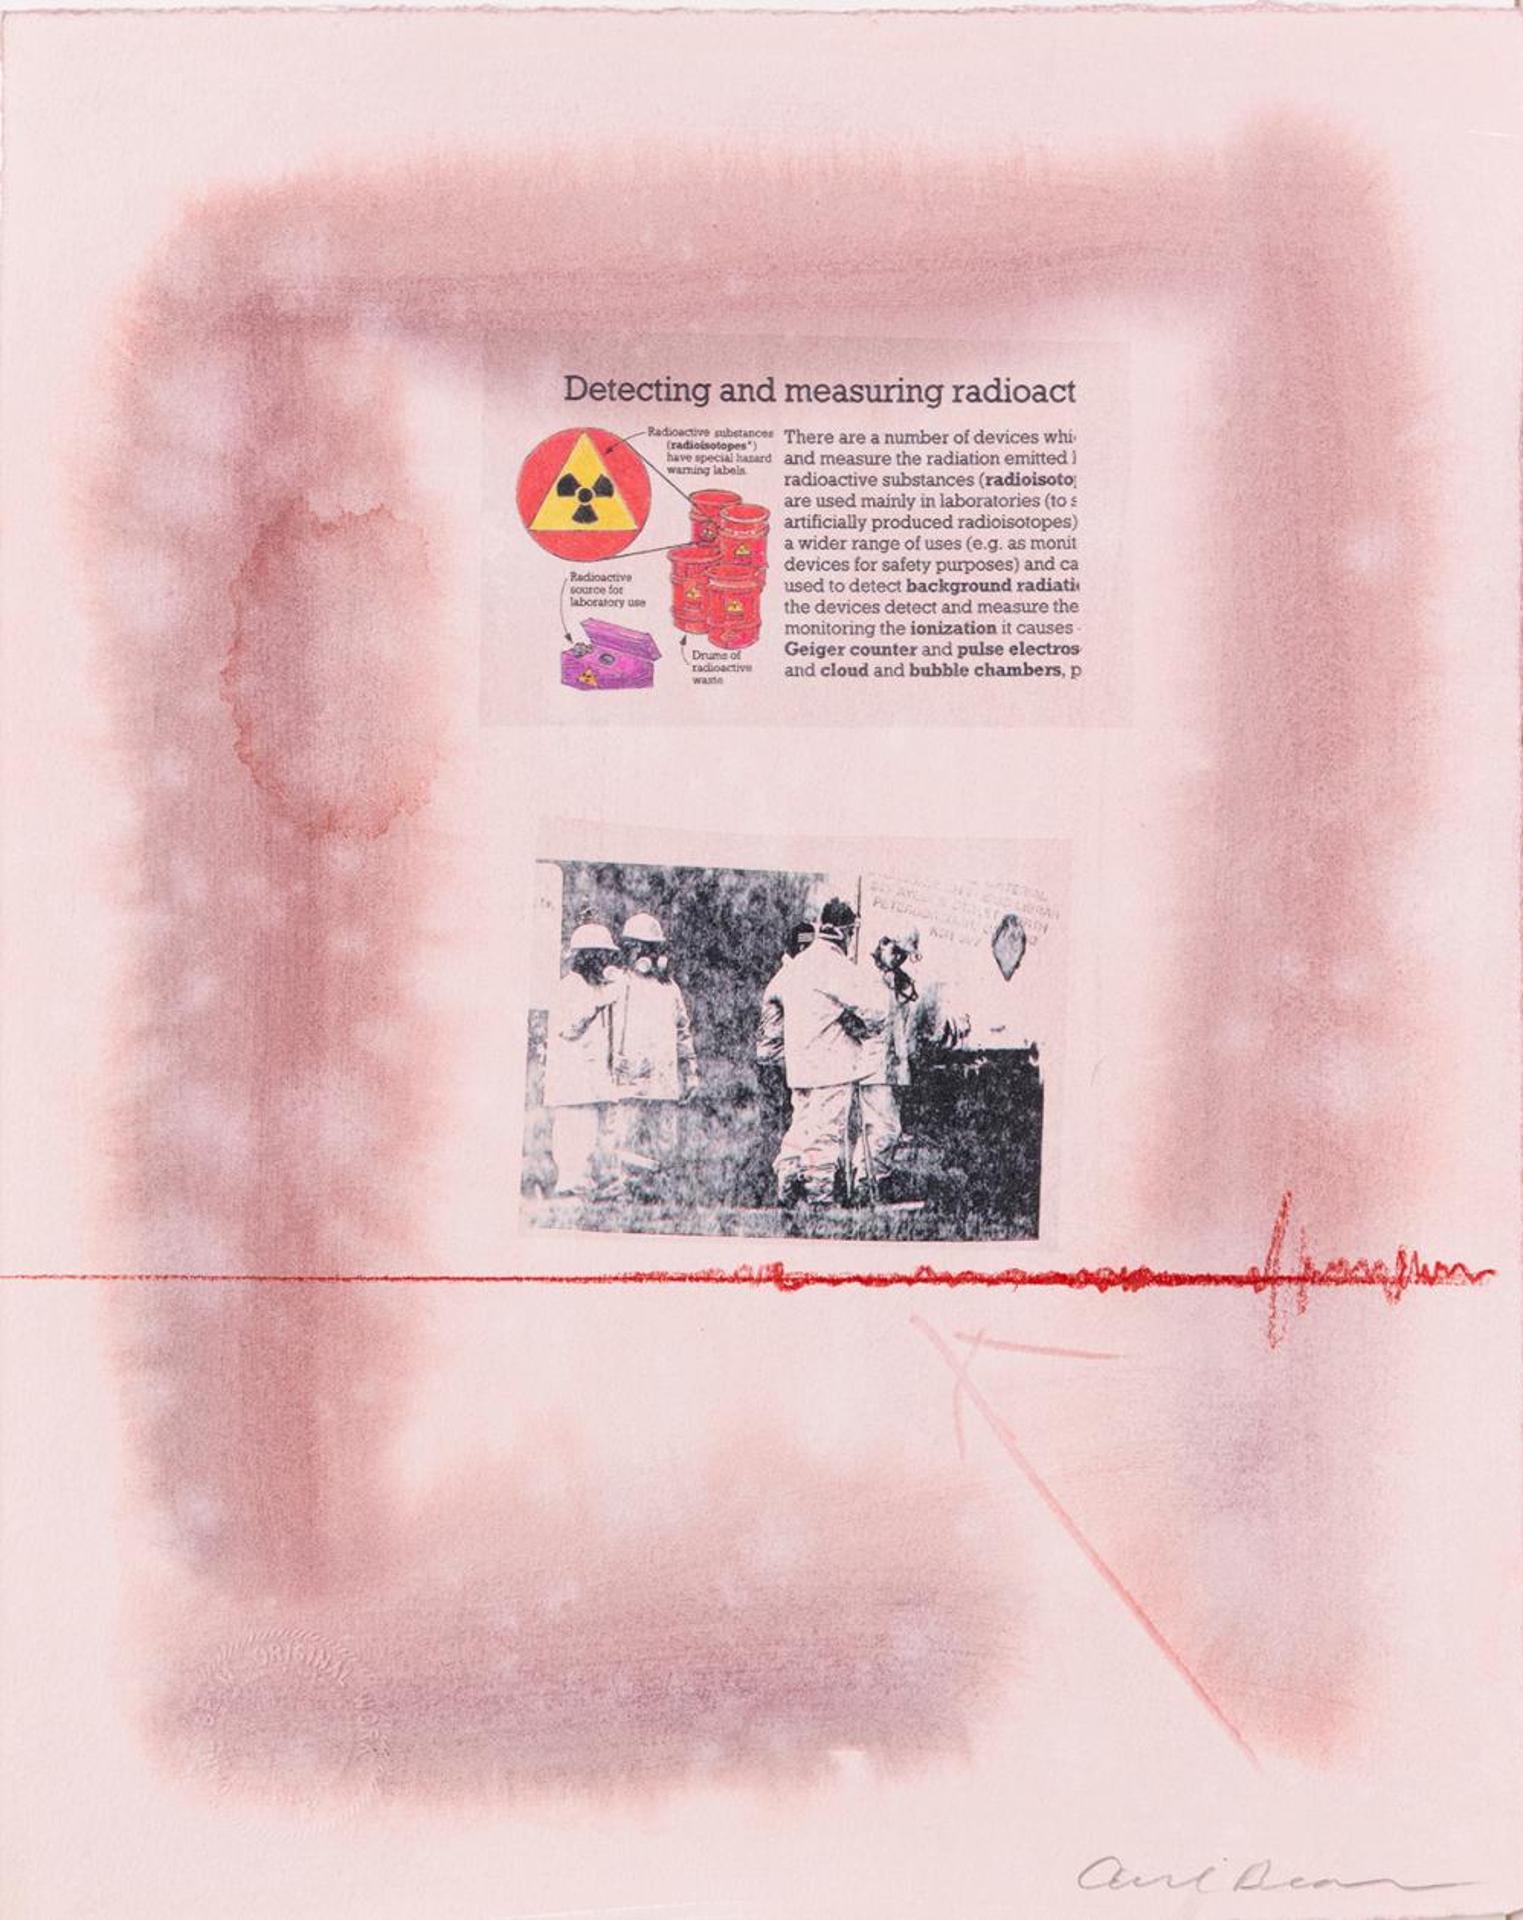 Carl Beam (1943-2005) - Untitled - Detecting Radioactivity